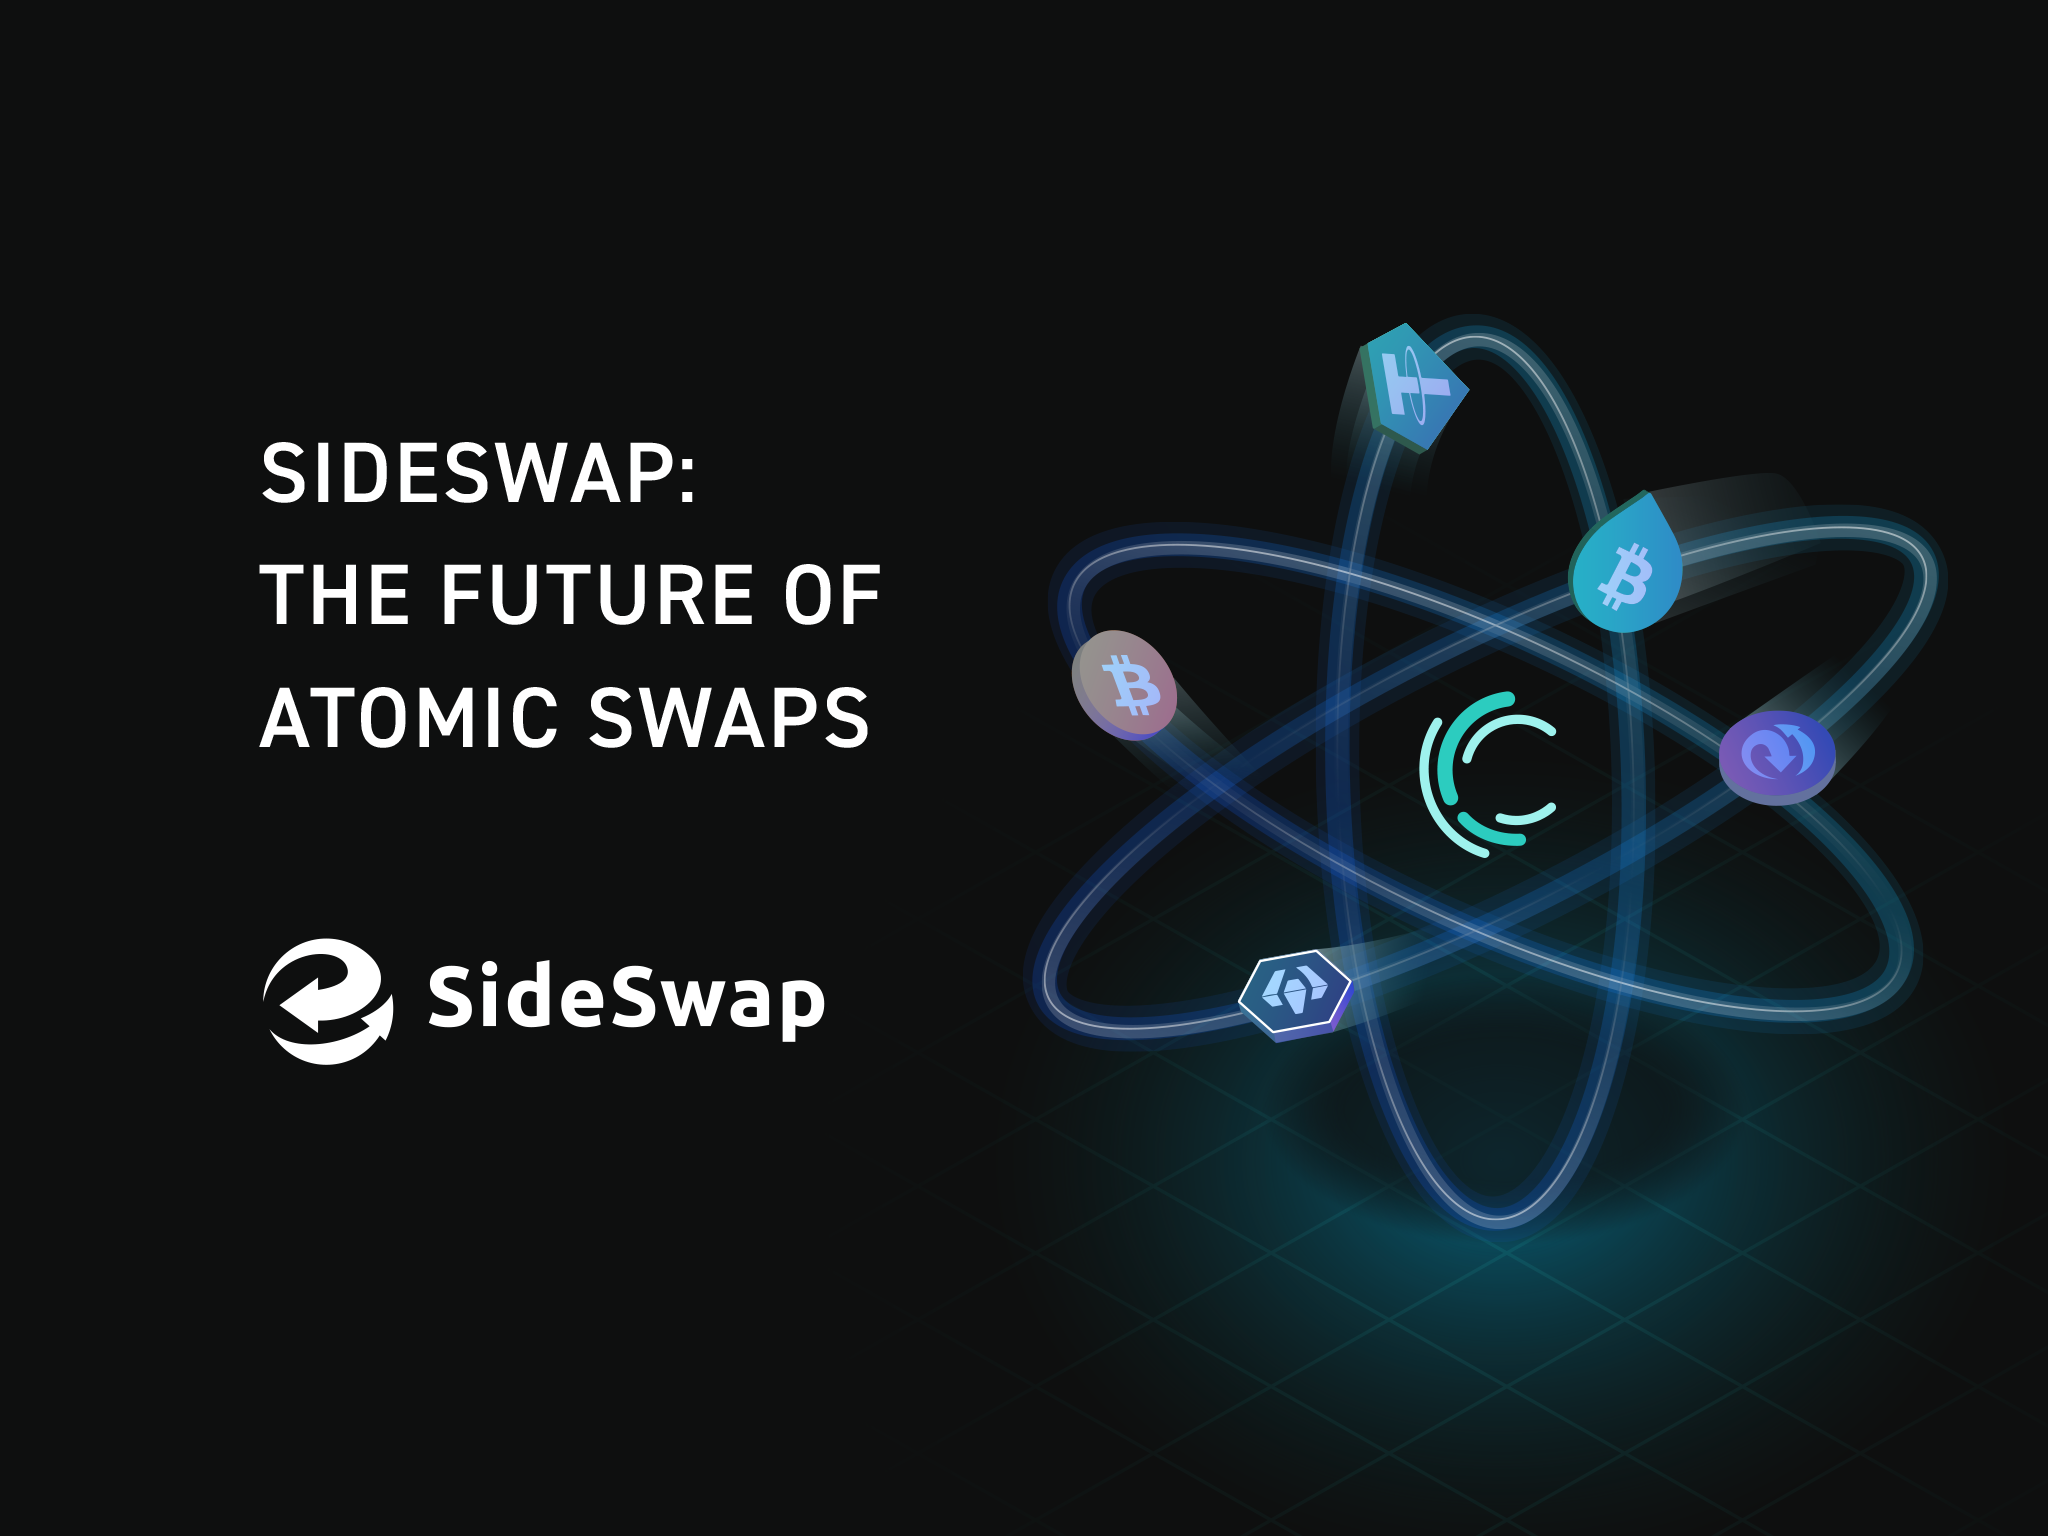 SideSwap: The Future of Atomic Swaps